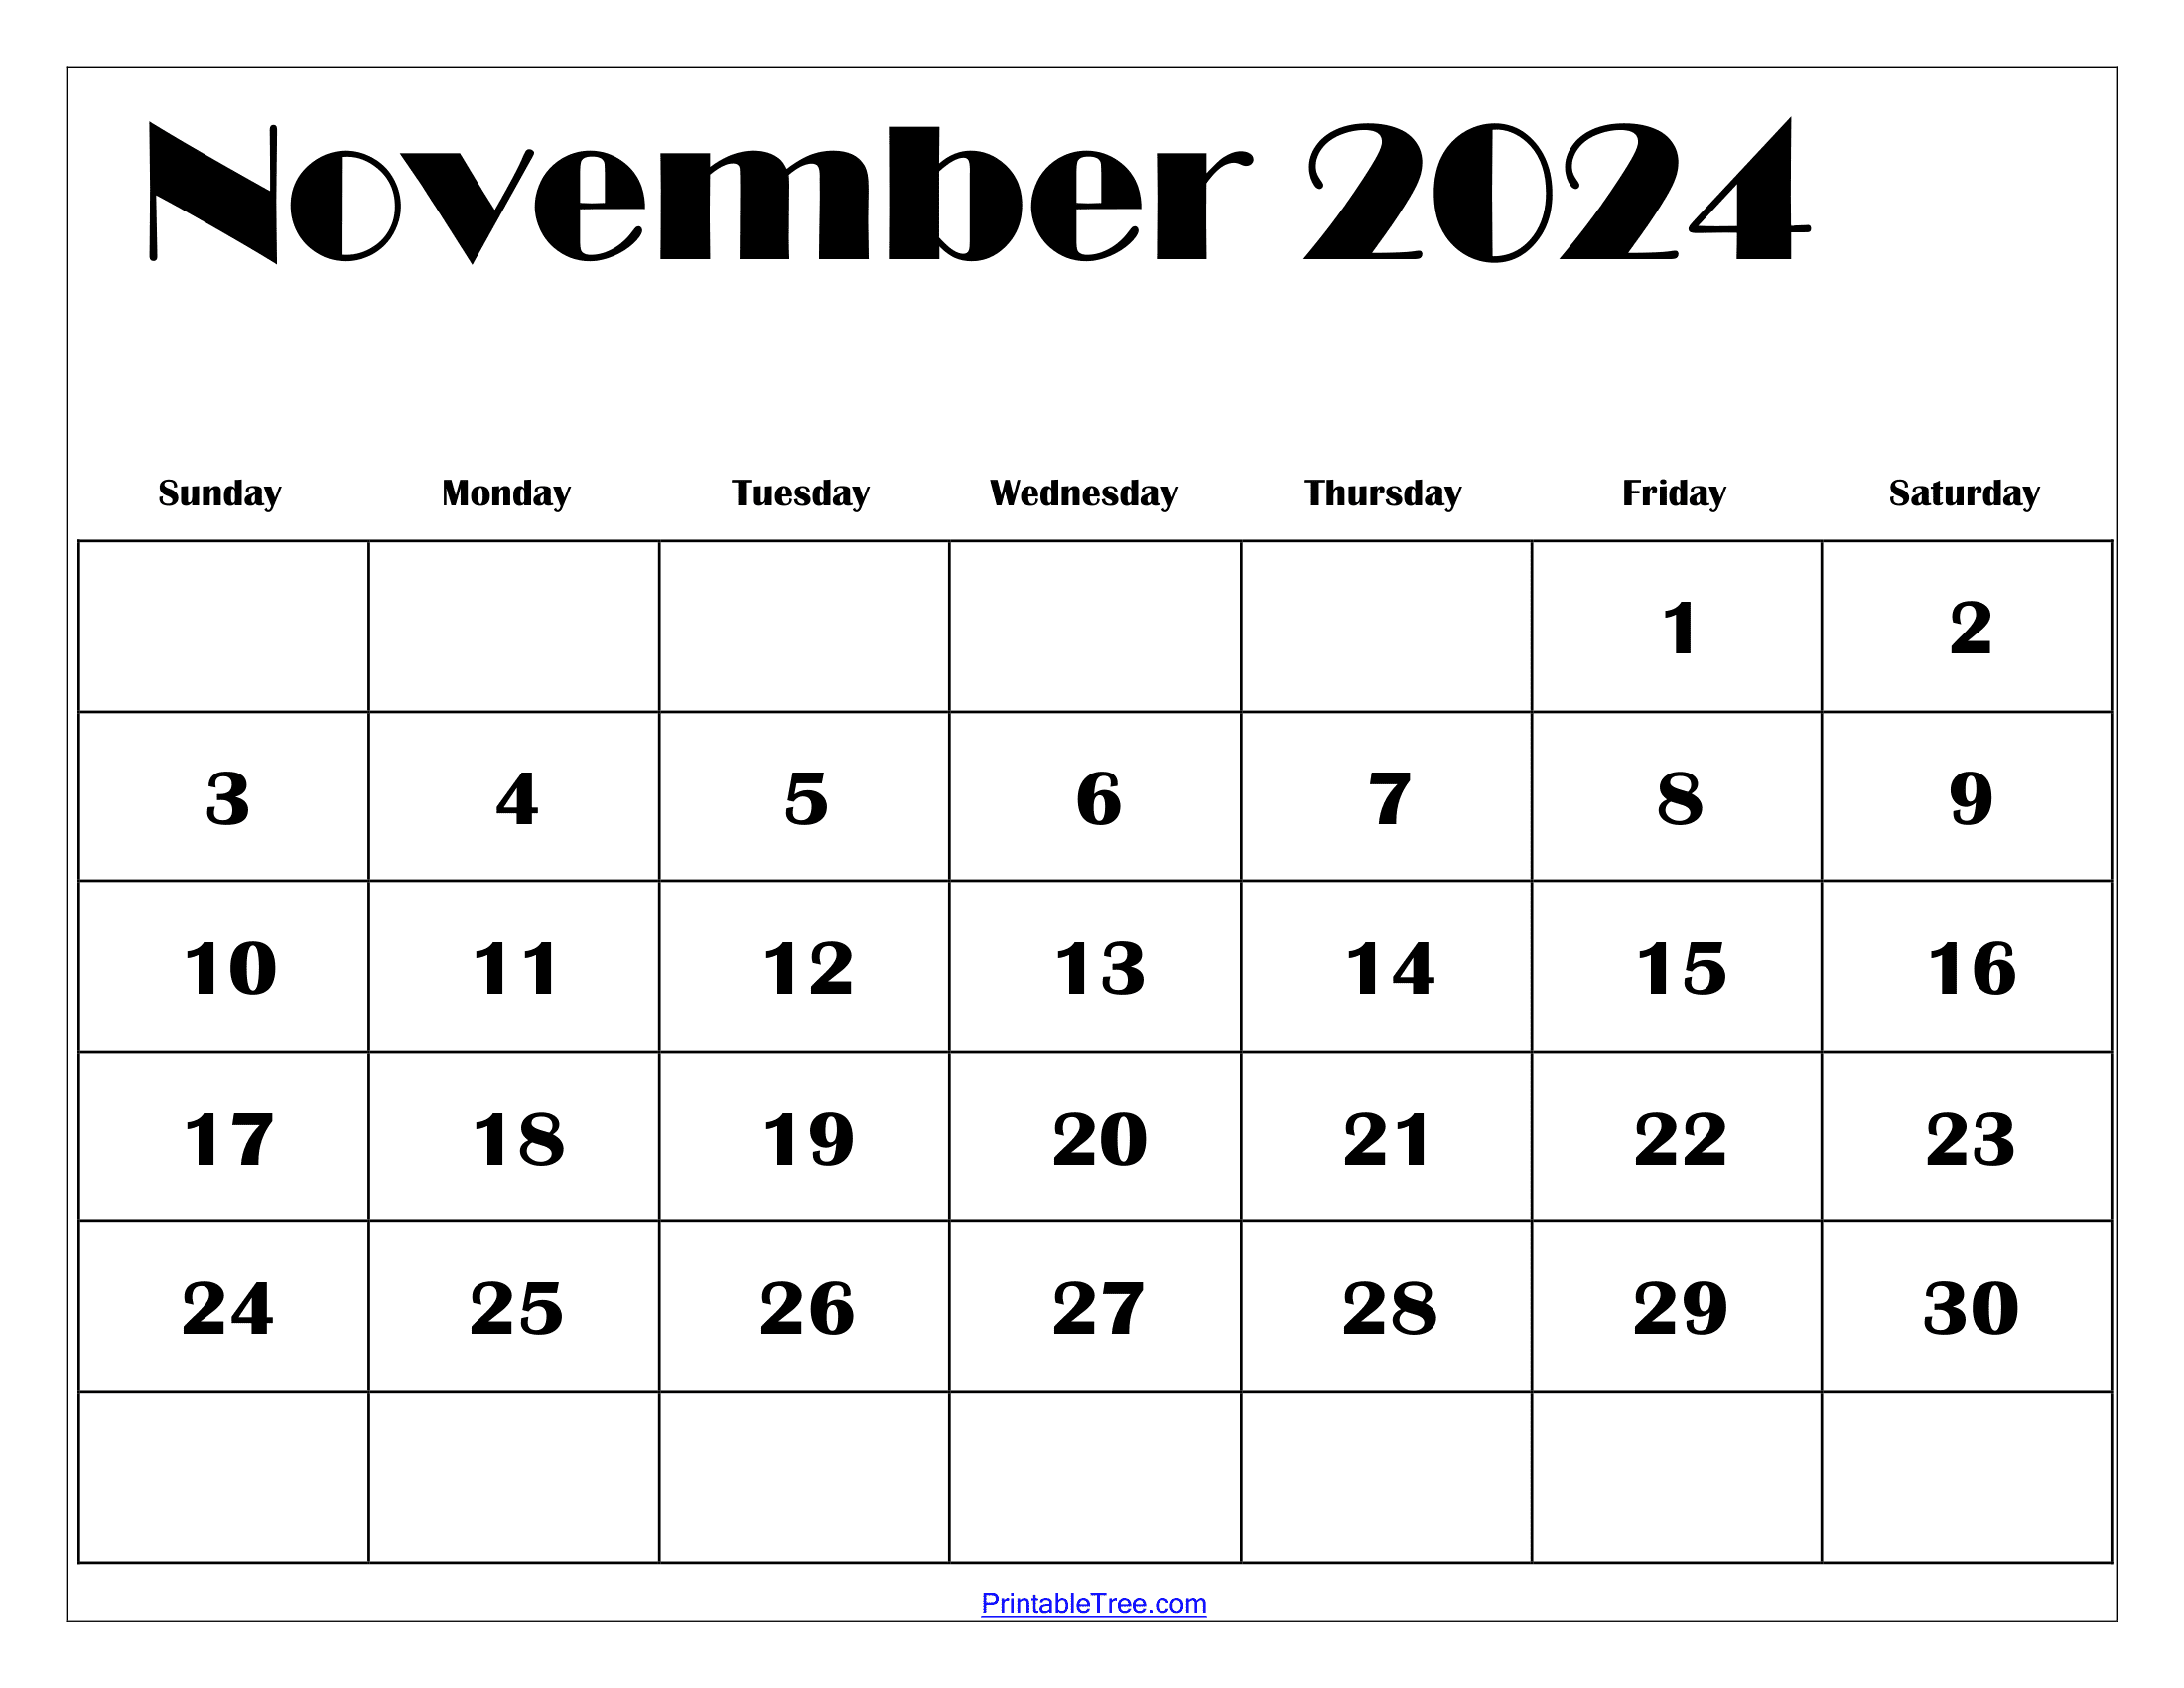 November 2024 Calendar Printable Pdf Template With Holidays for November 2024 Calendar Printable Free